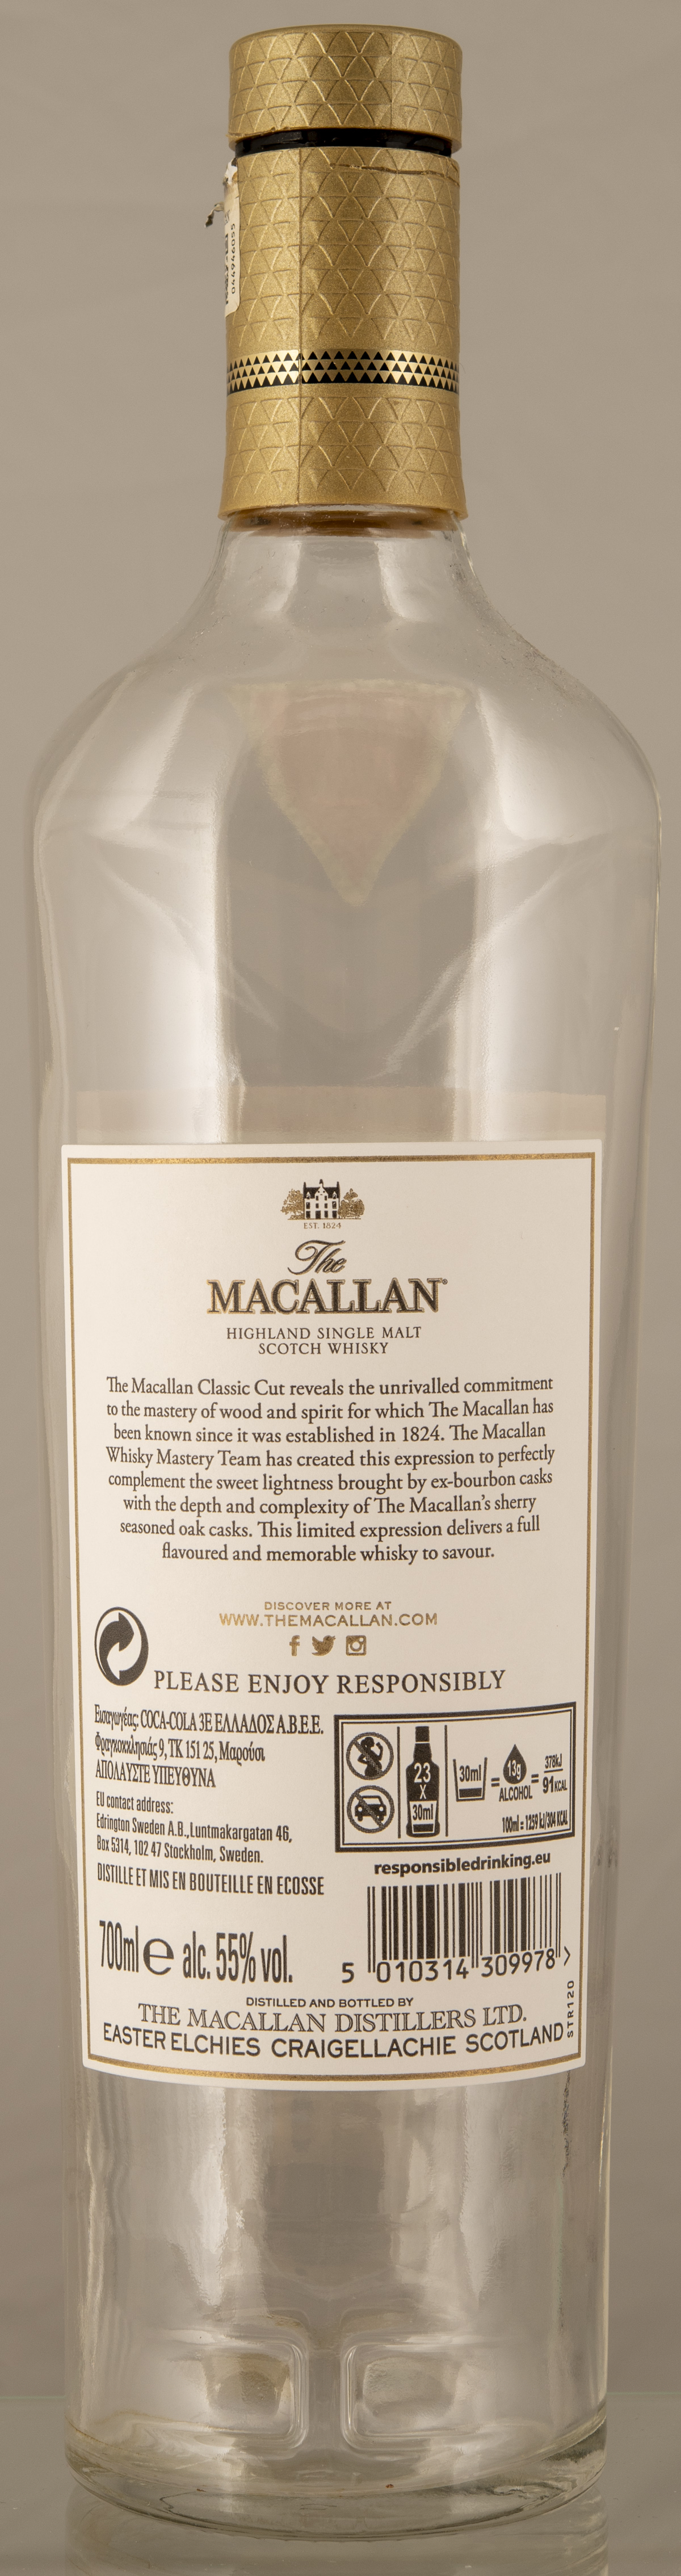 Billede: D85_8407 - MacAllan Classic Cut Limited 2020 edition - bottle back.jpg